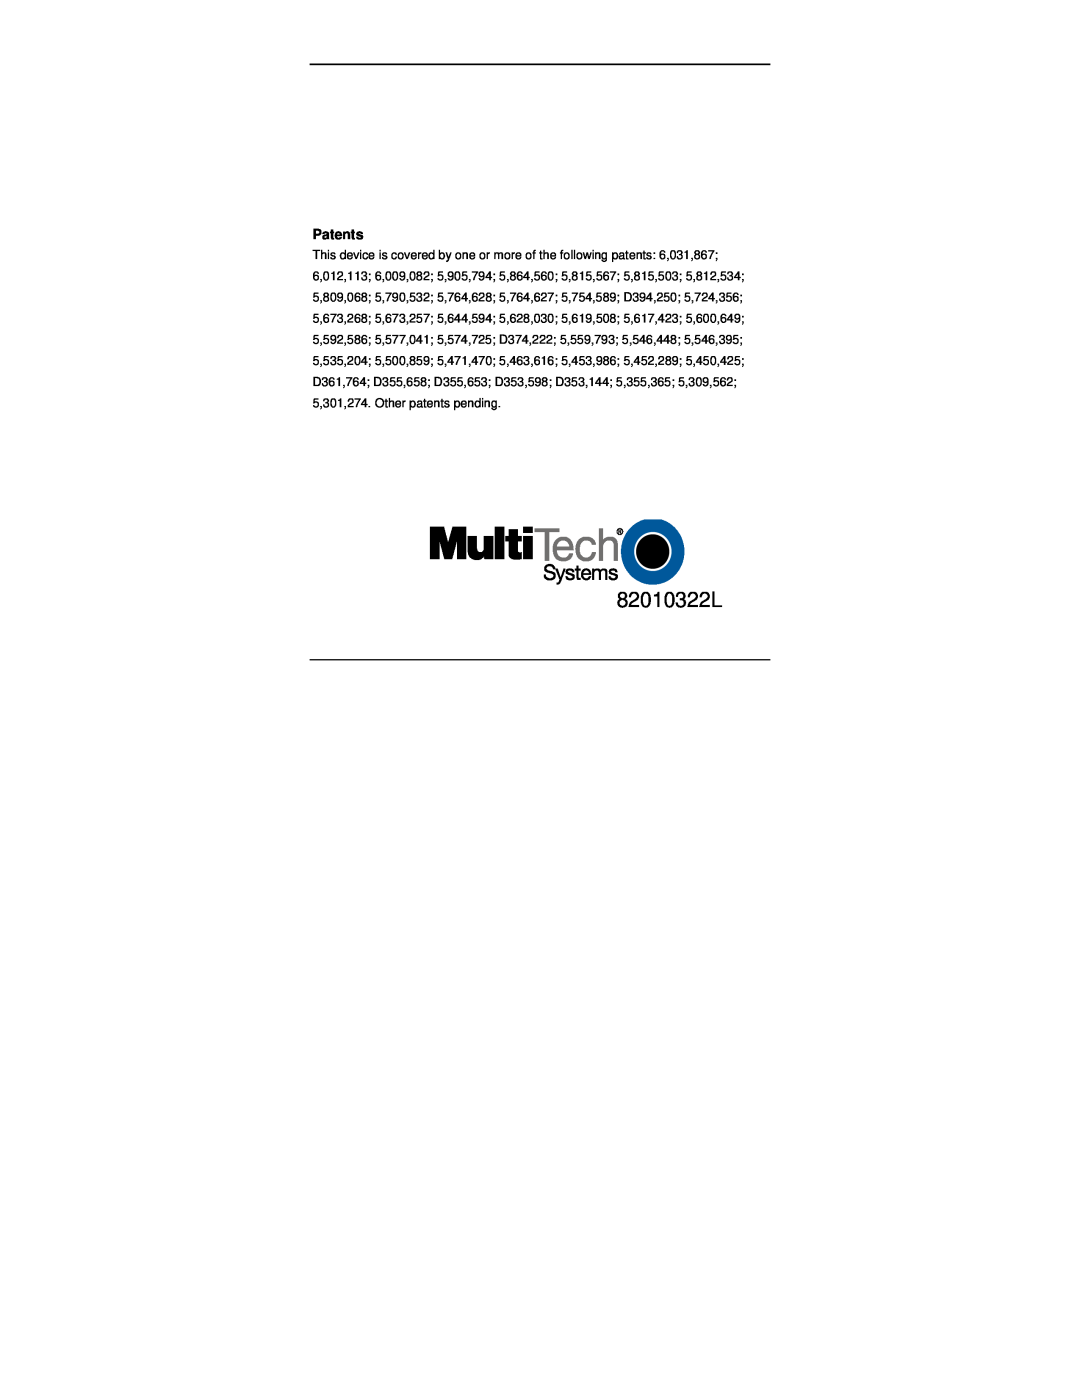 Multi-Tech Systems FF100 manual 82010322L, Patents 